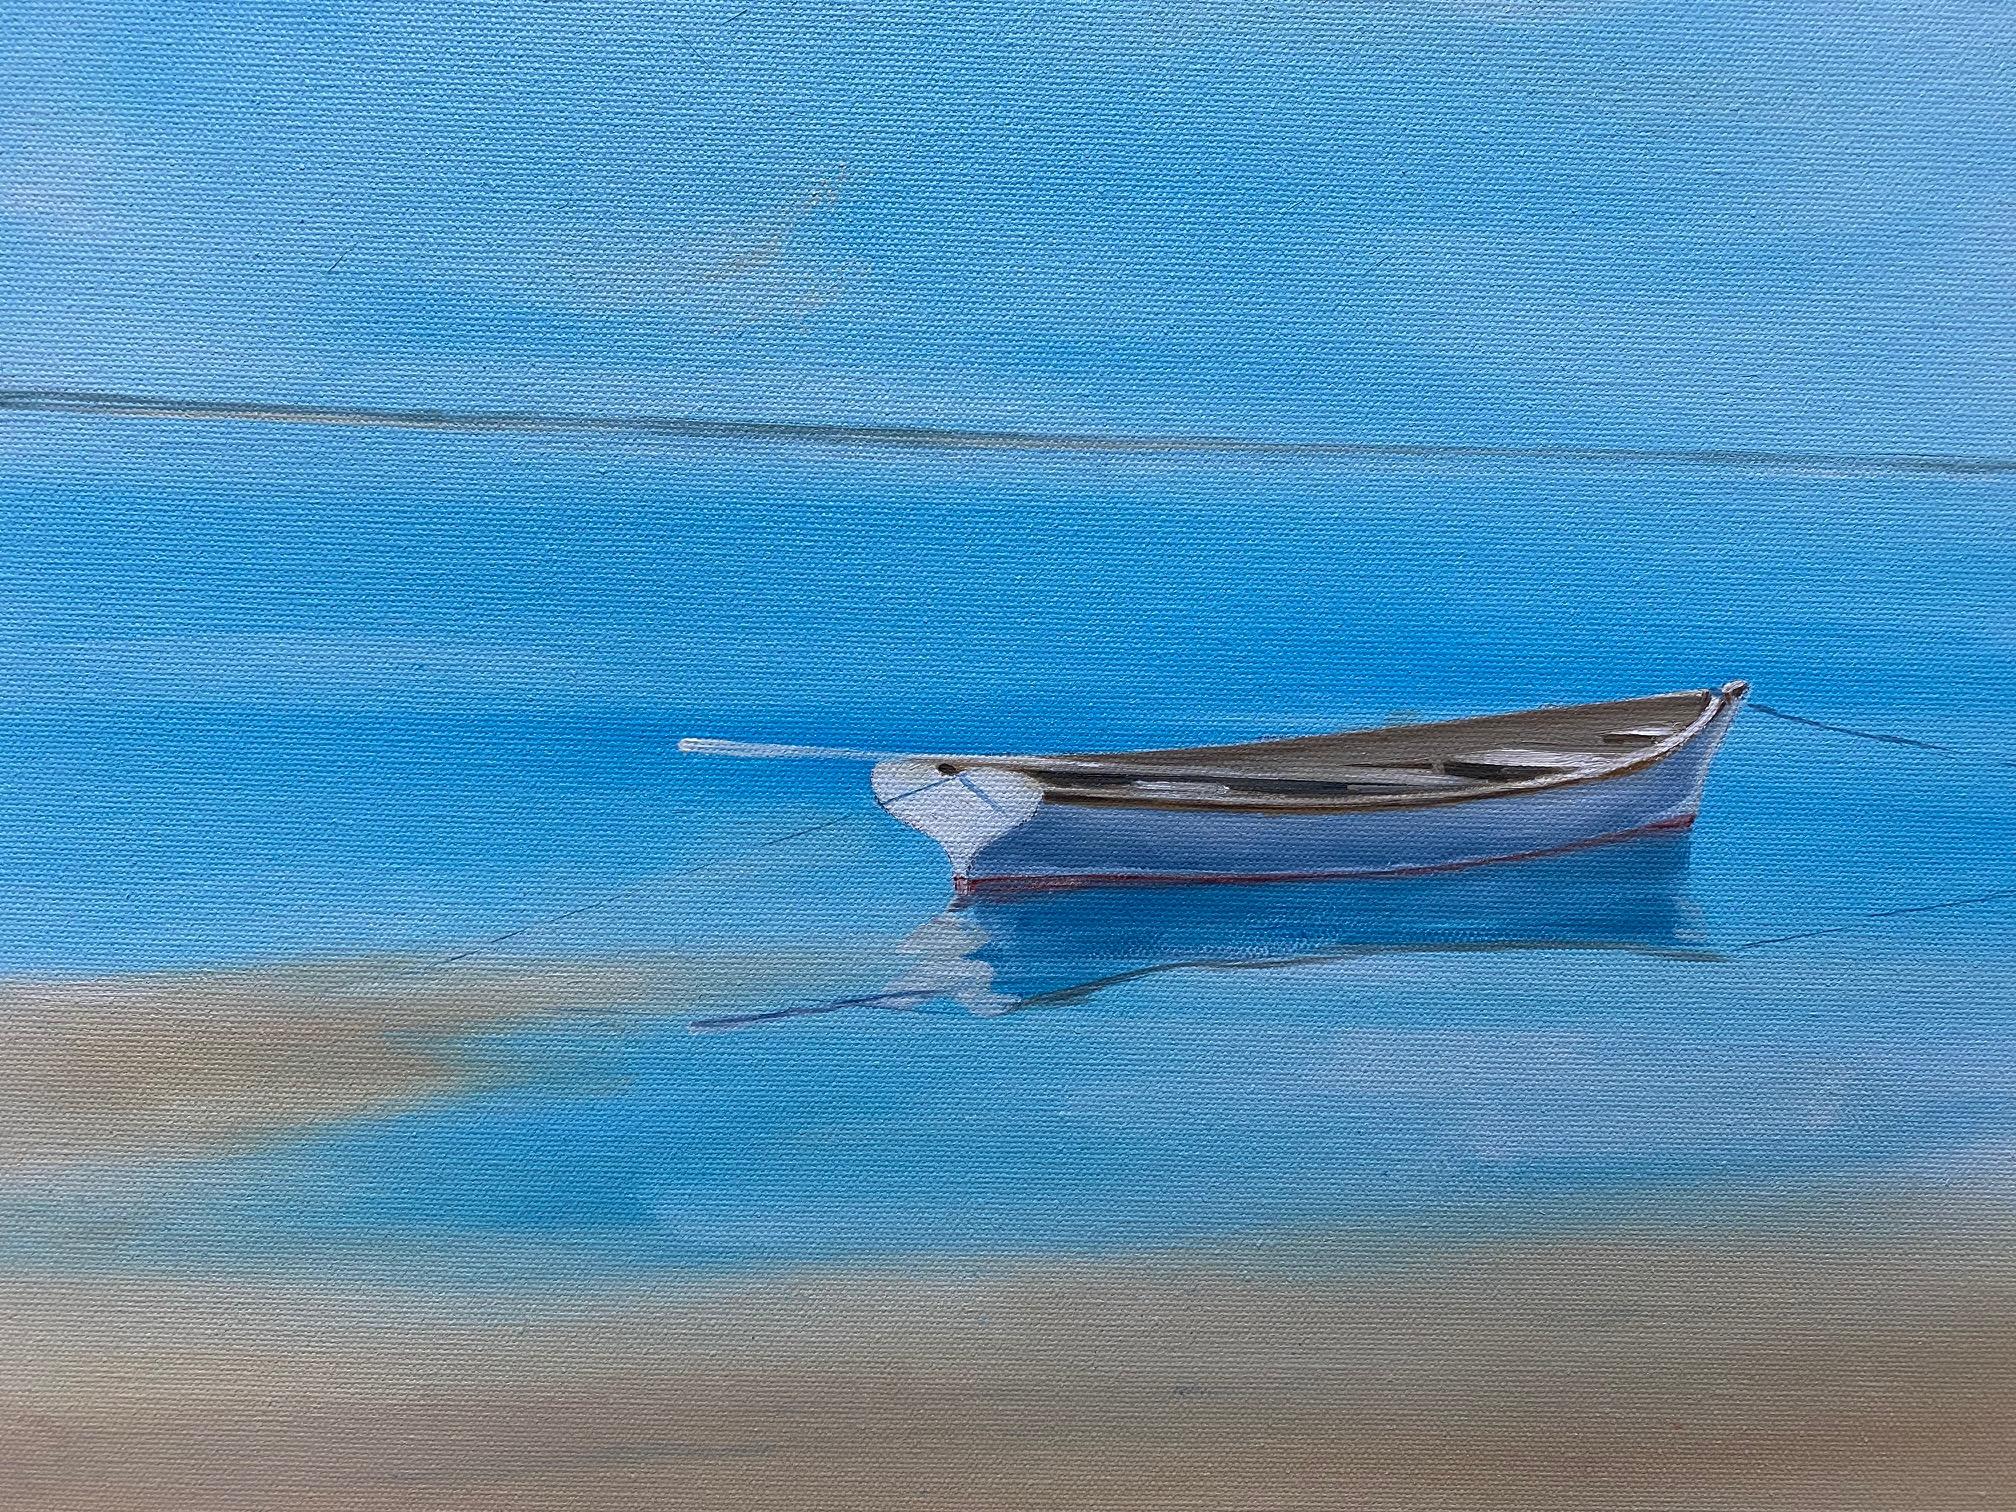 Sand and Sea, original 30x40 contemporary realist marine landscape - Blue Abstract Painting by Rinaldo Skalamera